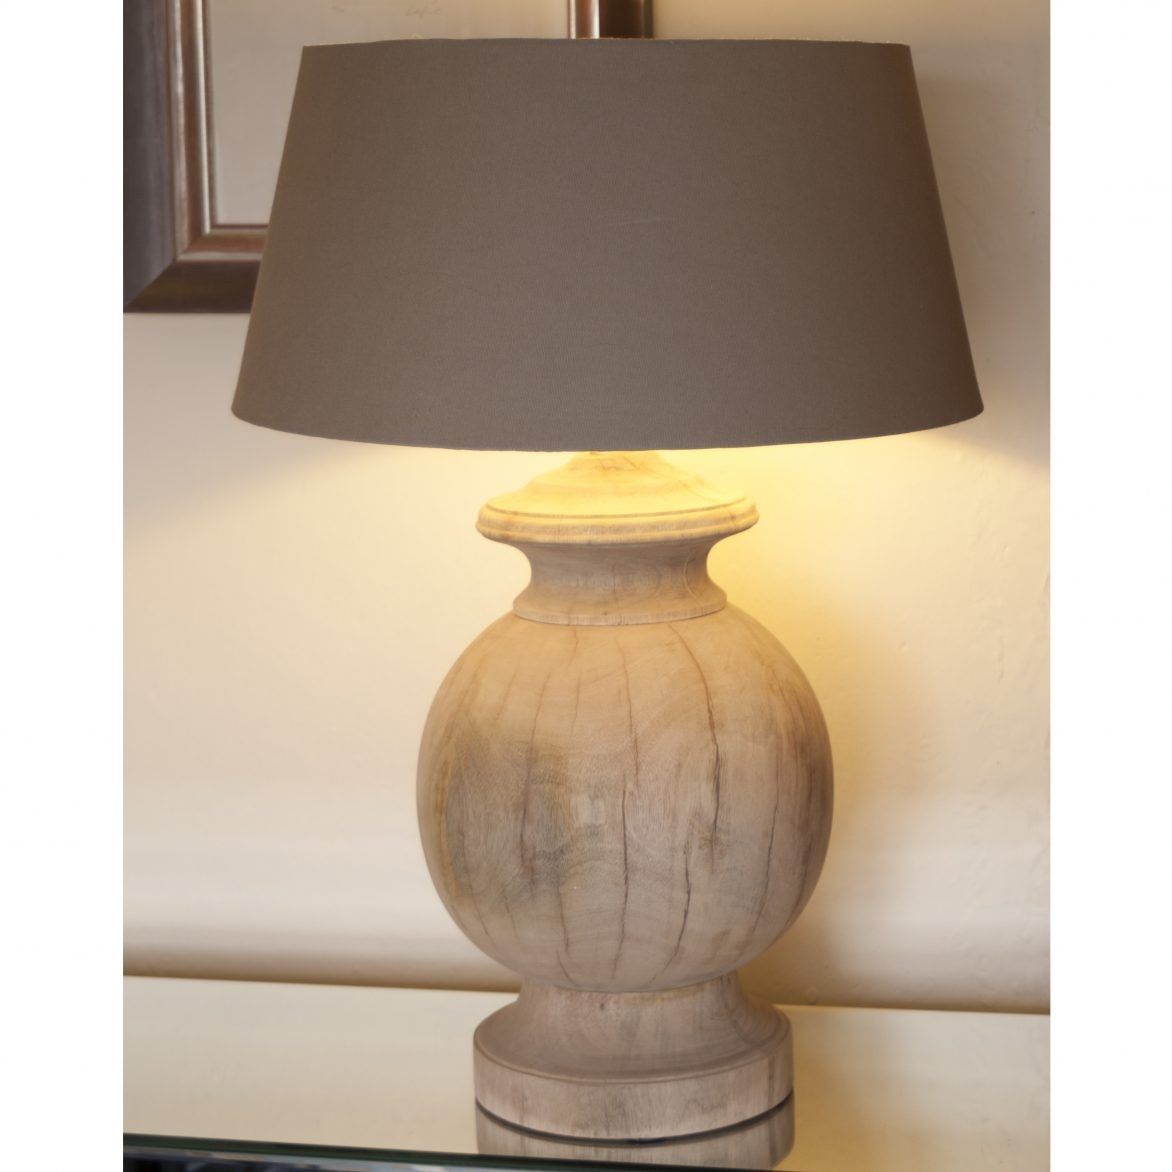 Buy Table Lamp Grey Bedside Lamps Bedroom Amazon Nightstand Night Within Amazon Living Room Table Lamps 